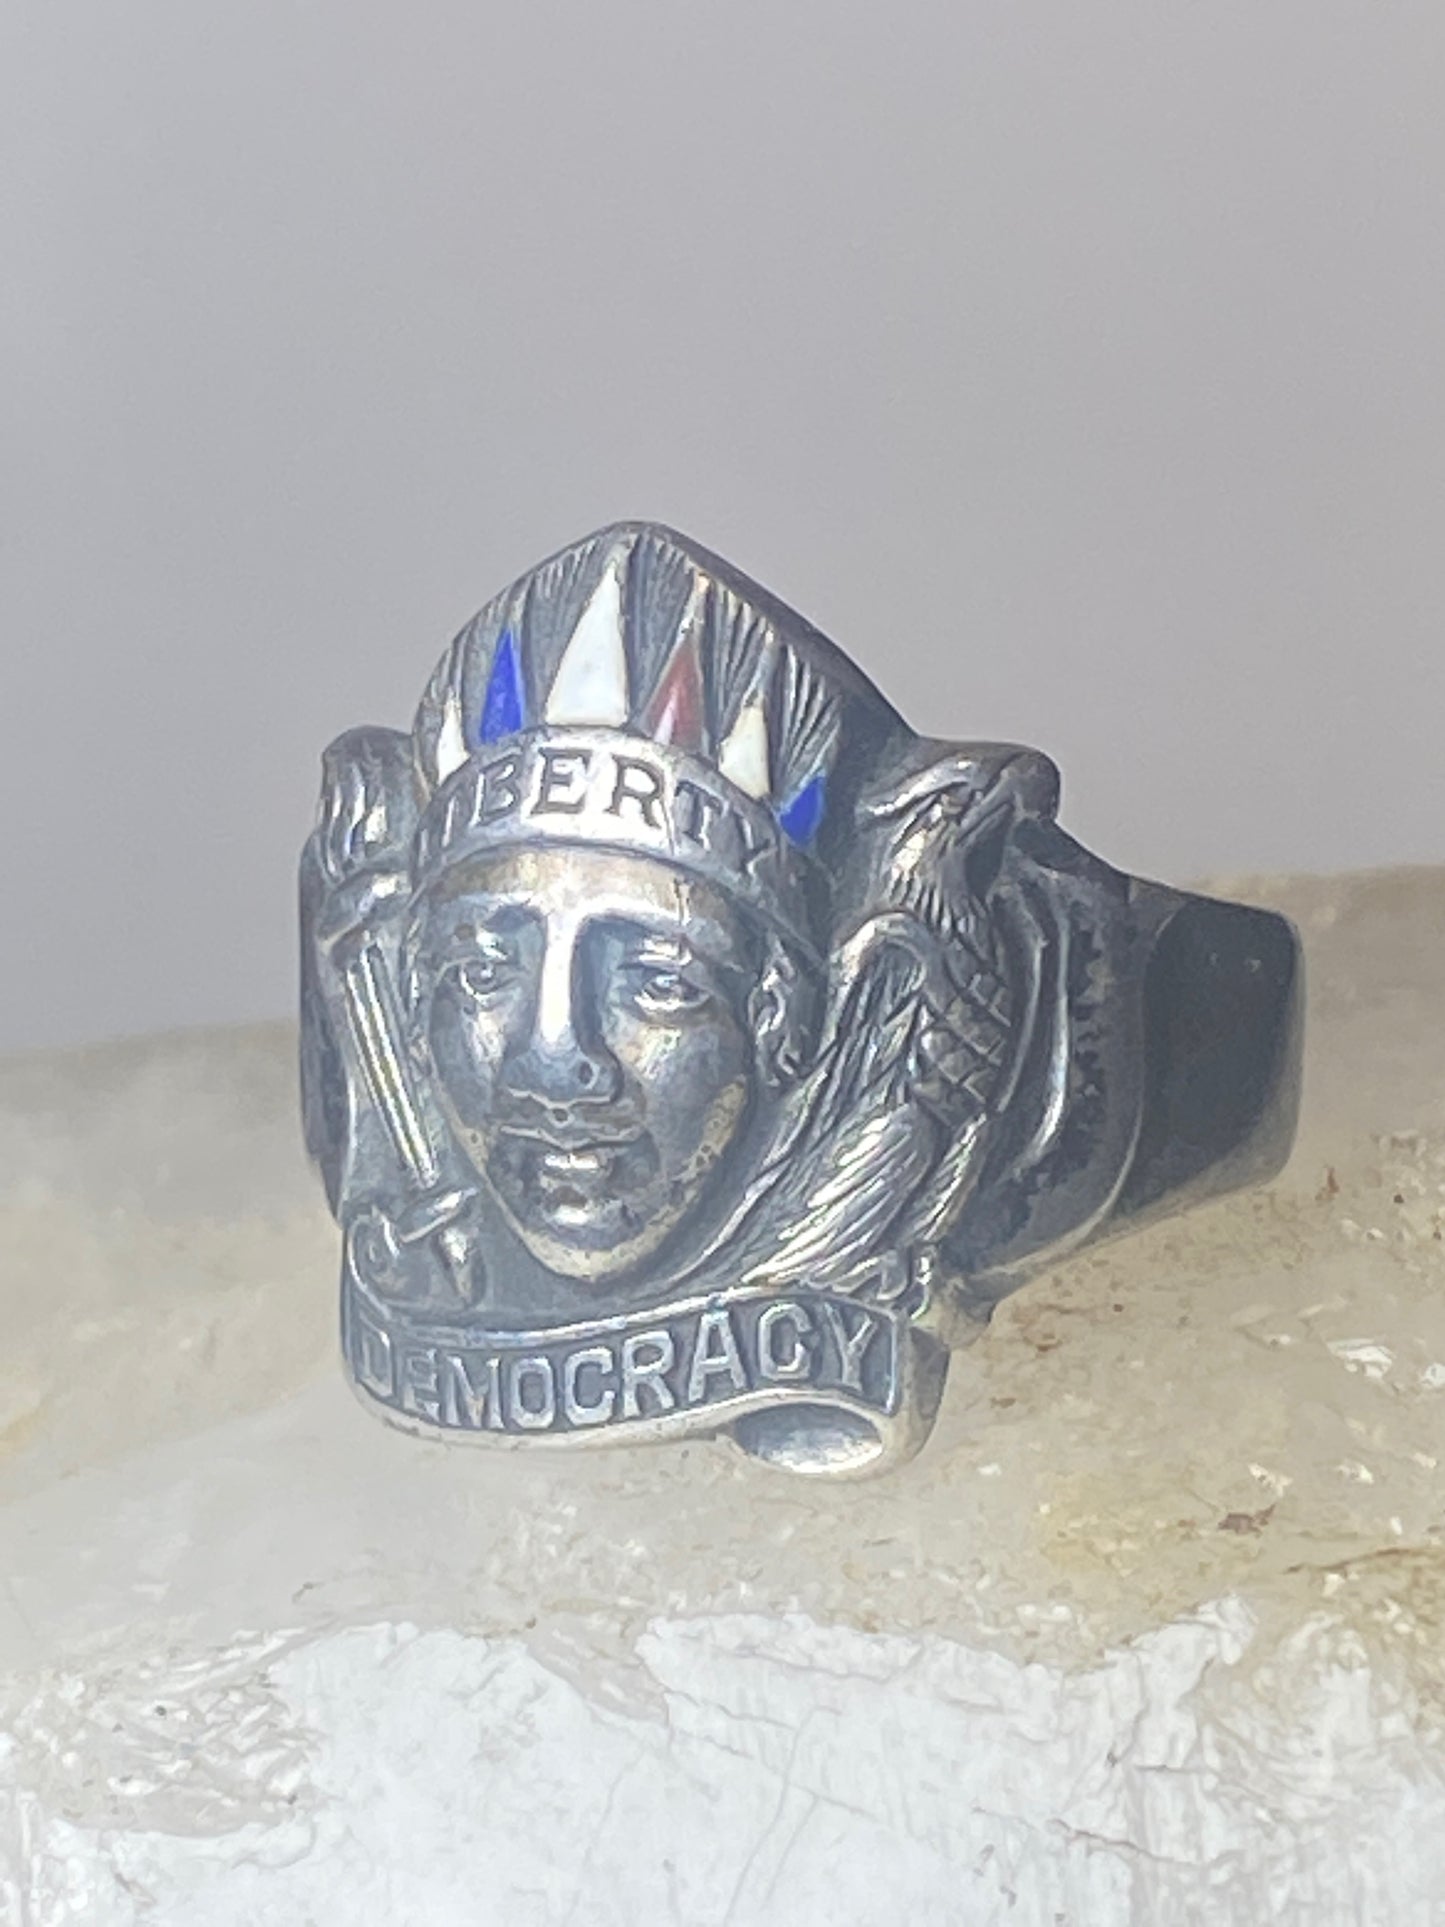 1938 Liberty Democracy Ring size 9.75 Samuel Jaffe Patent sterling silver